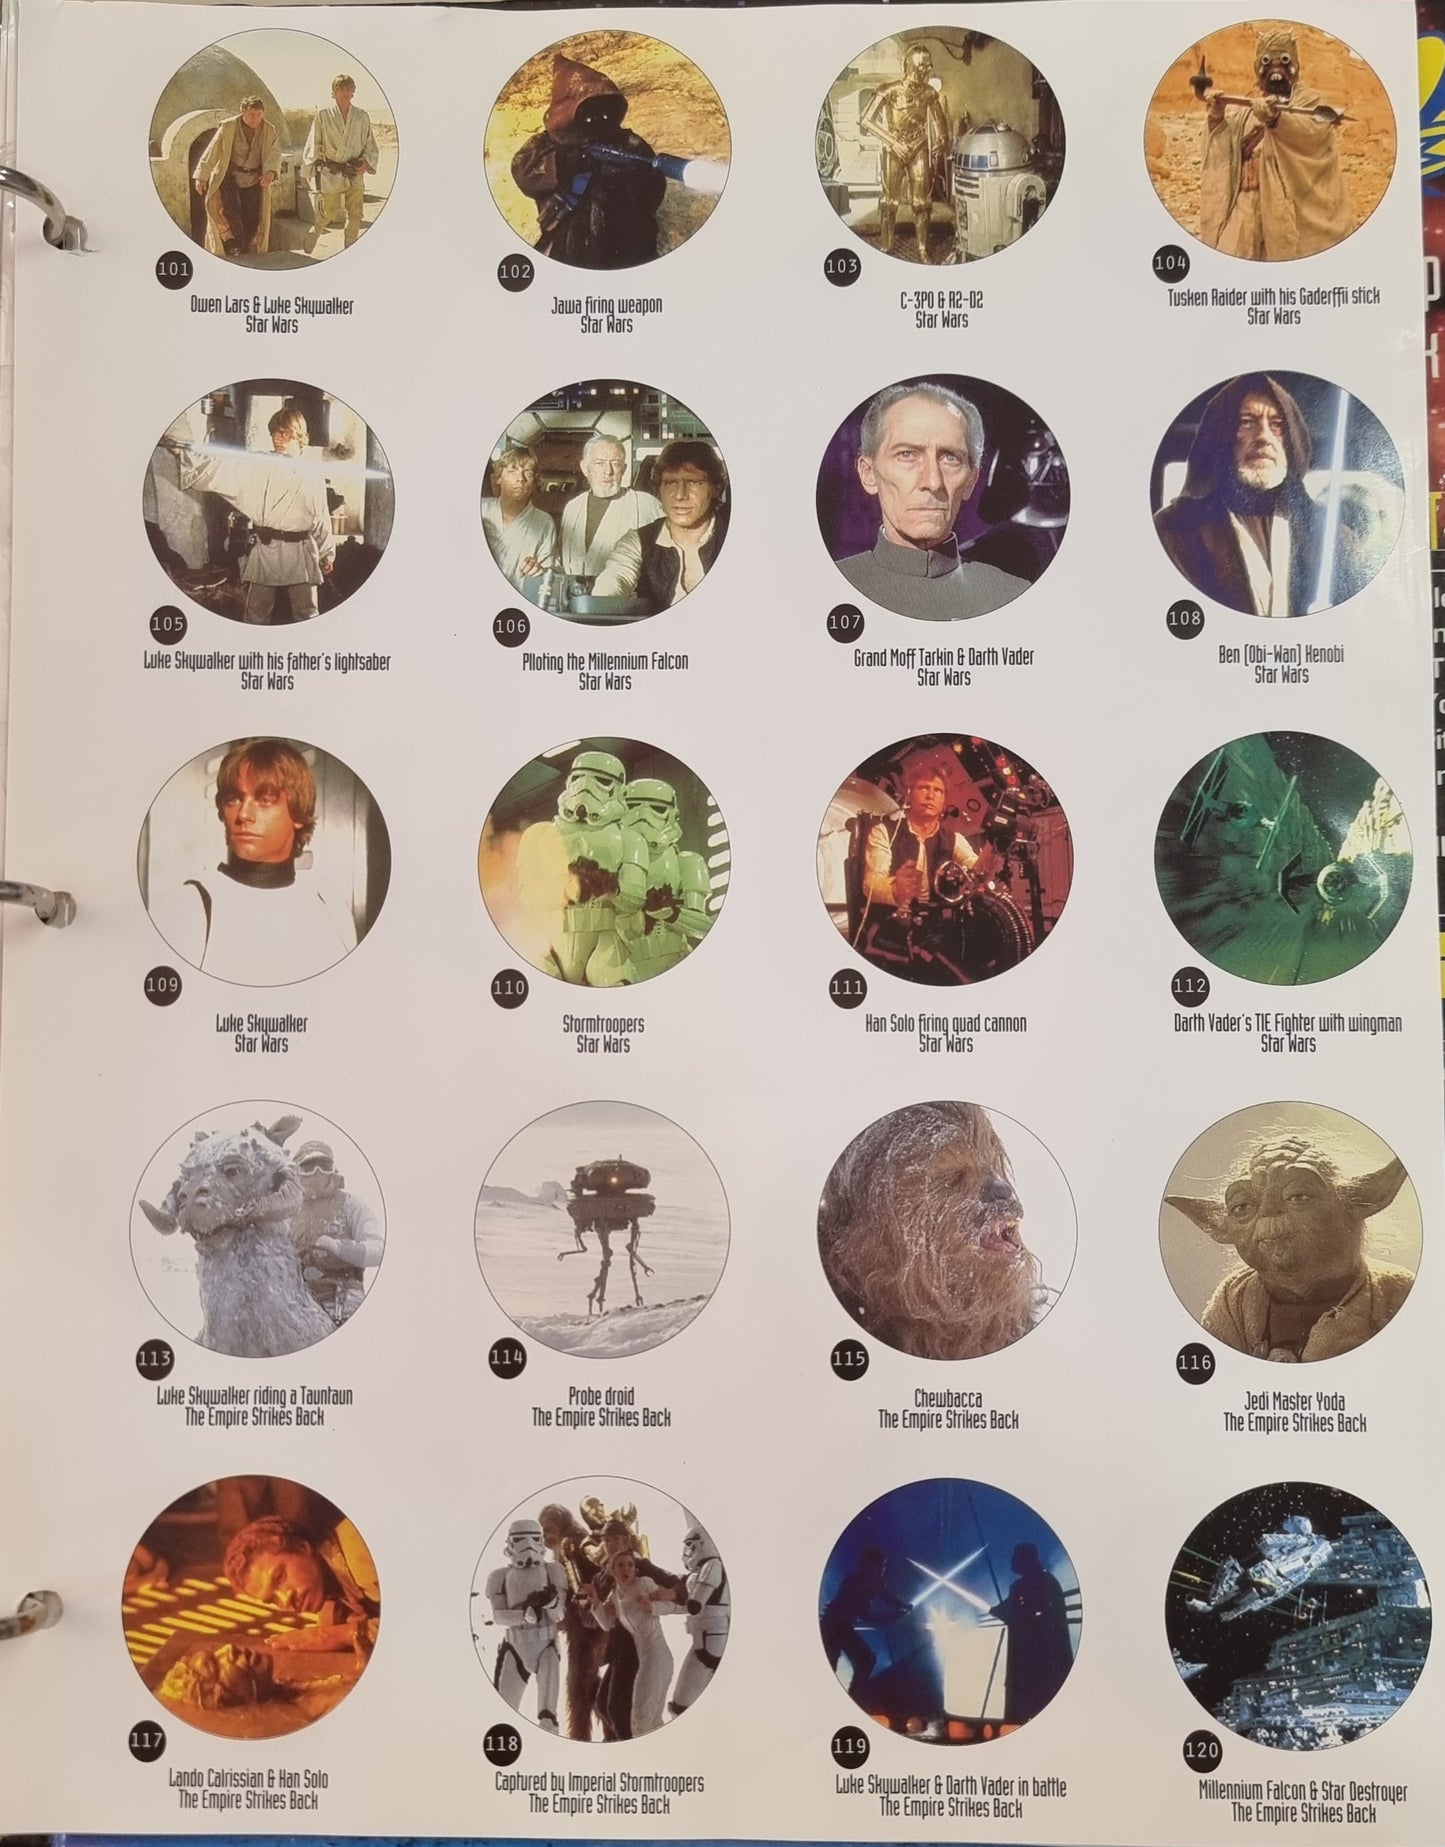 Star Wars TAZOS in Collector's Album